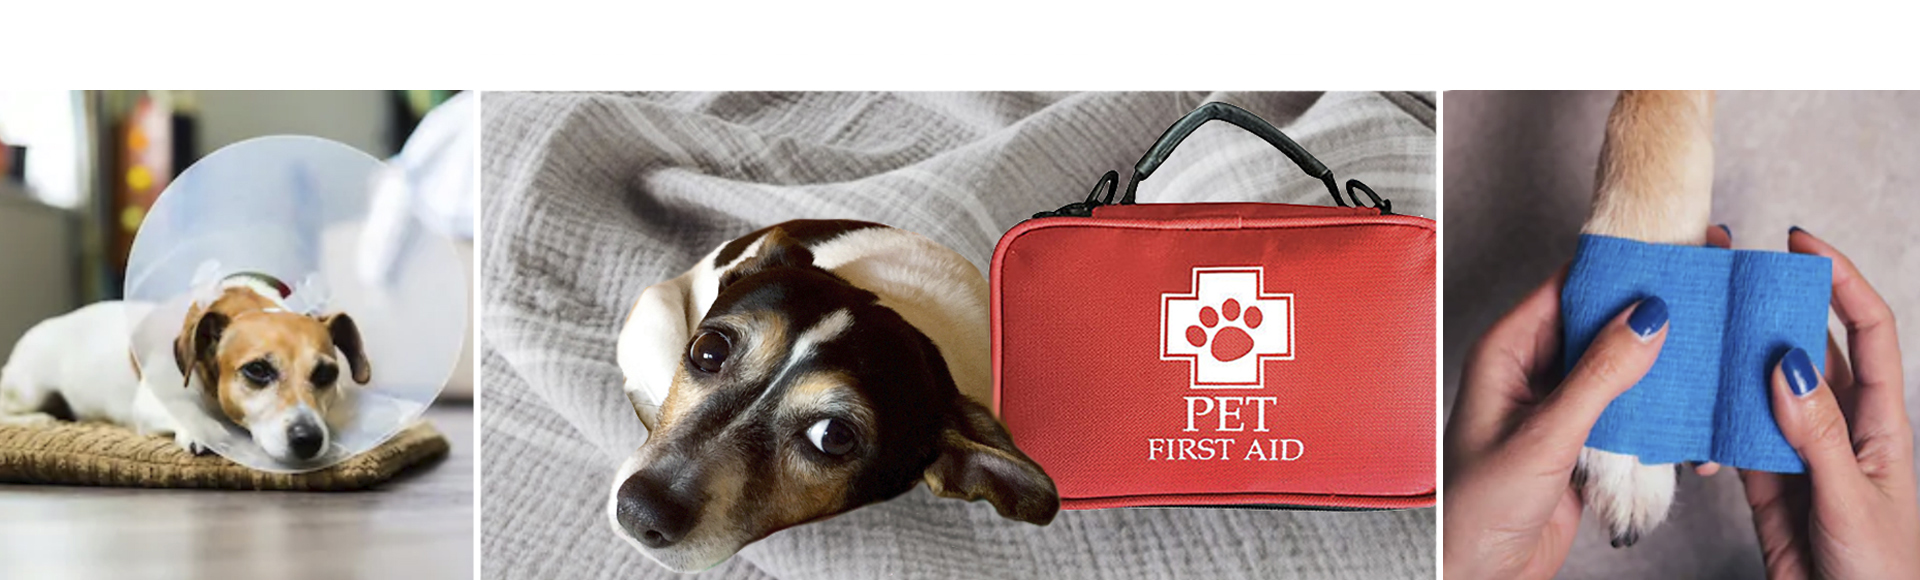 Pet First Aid Kit - New Rattitude